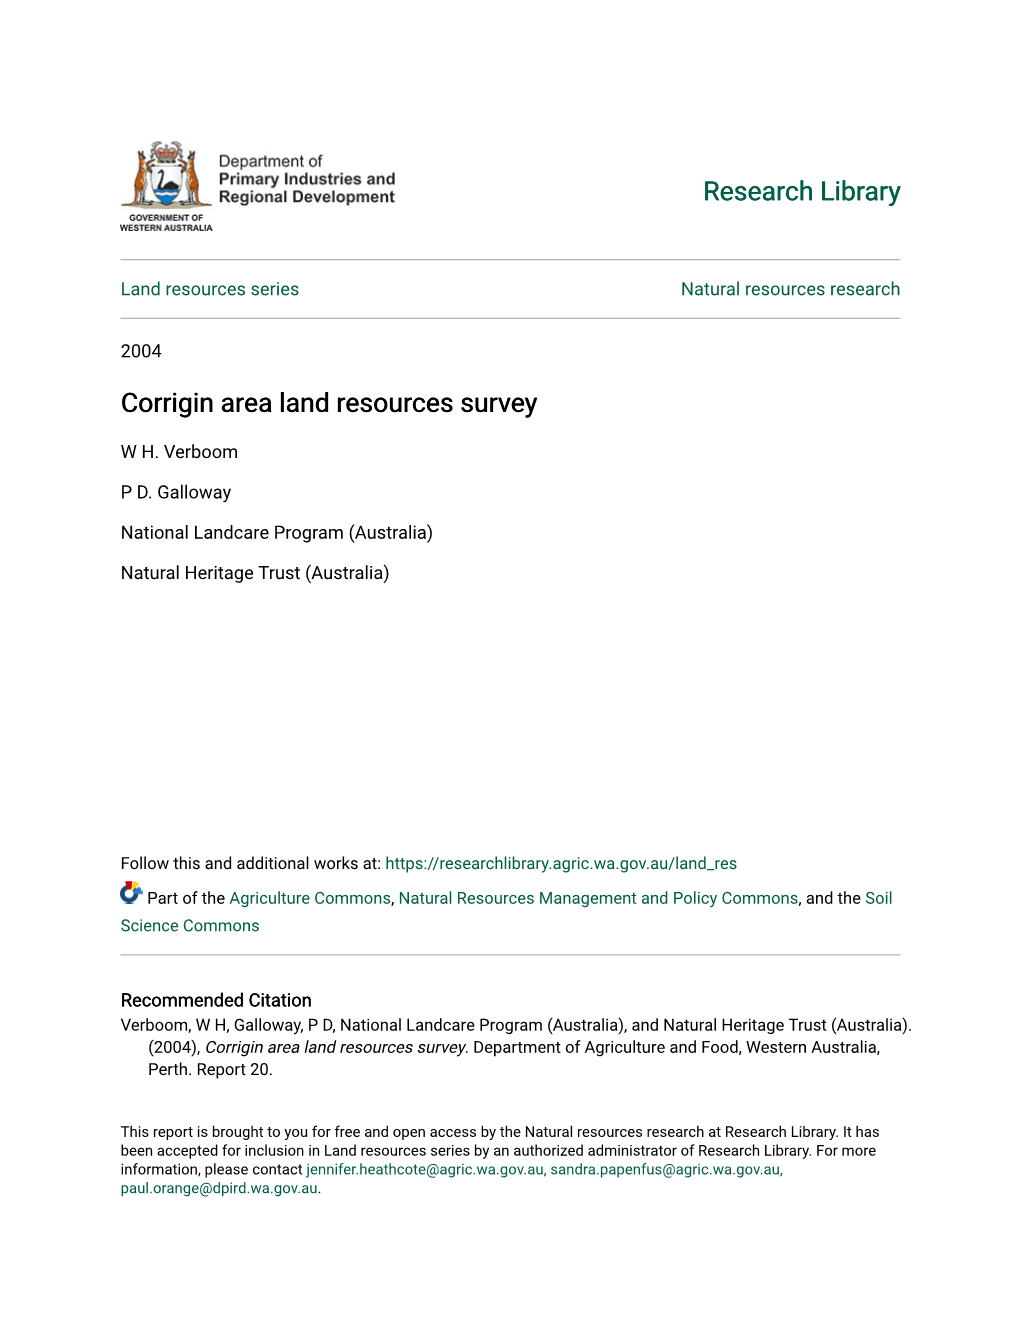 Corrigin Area Land Resources Survey